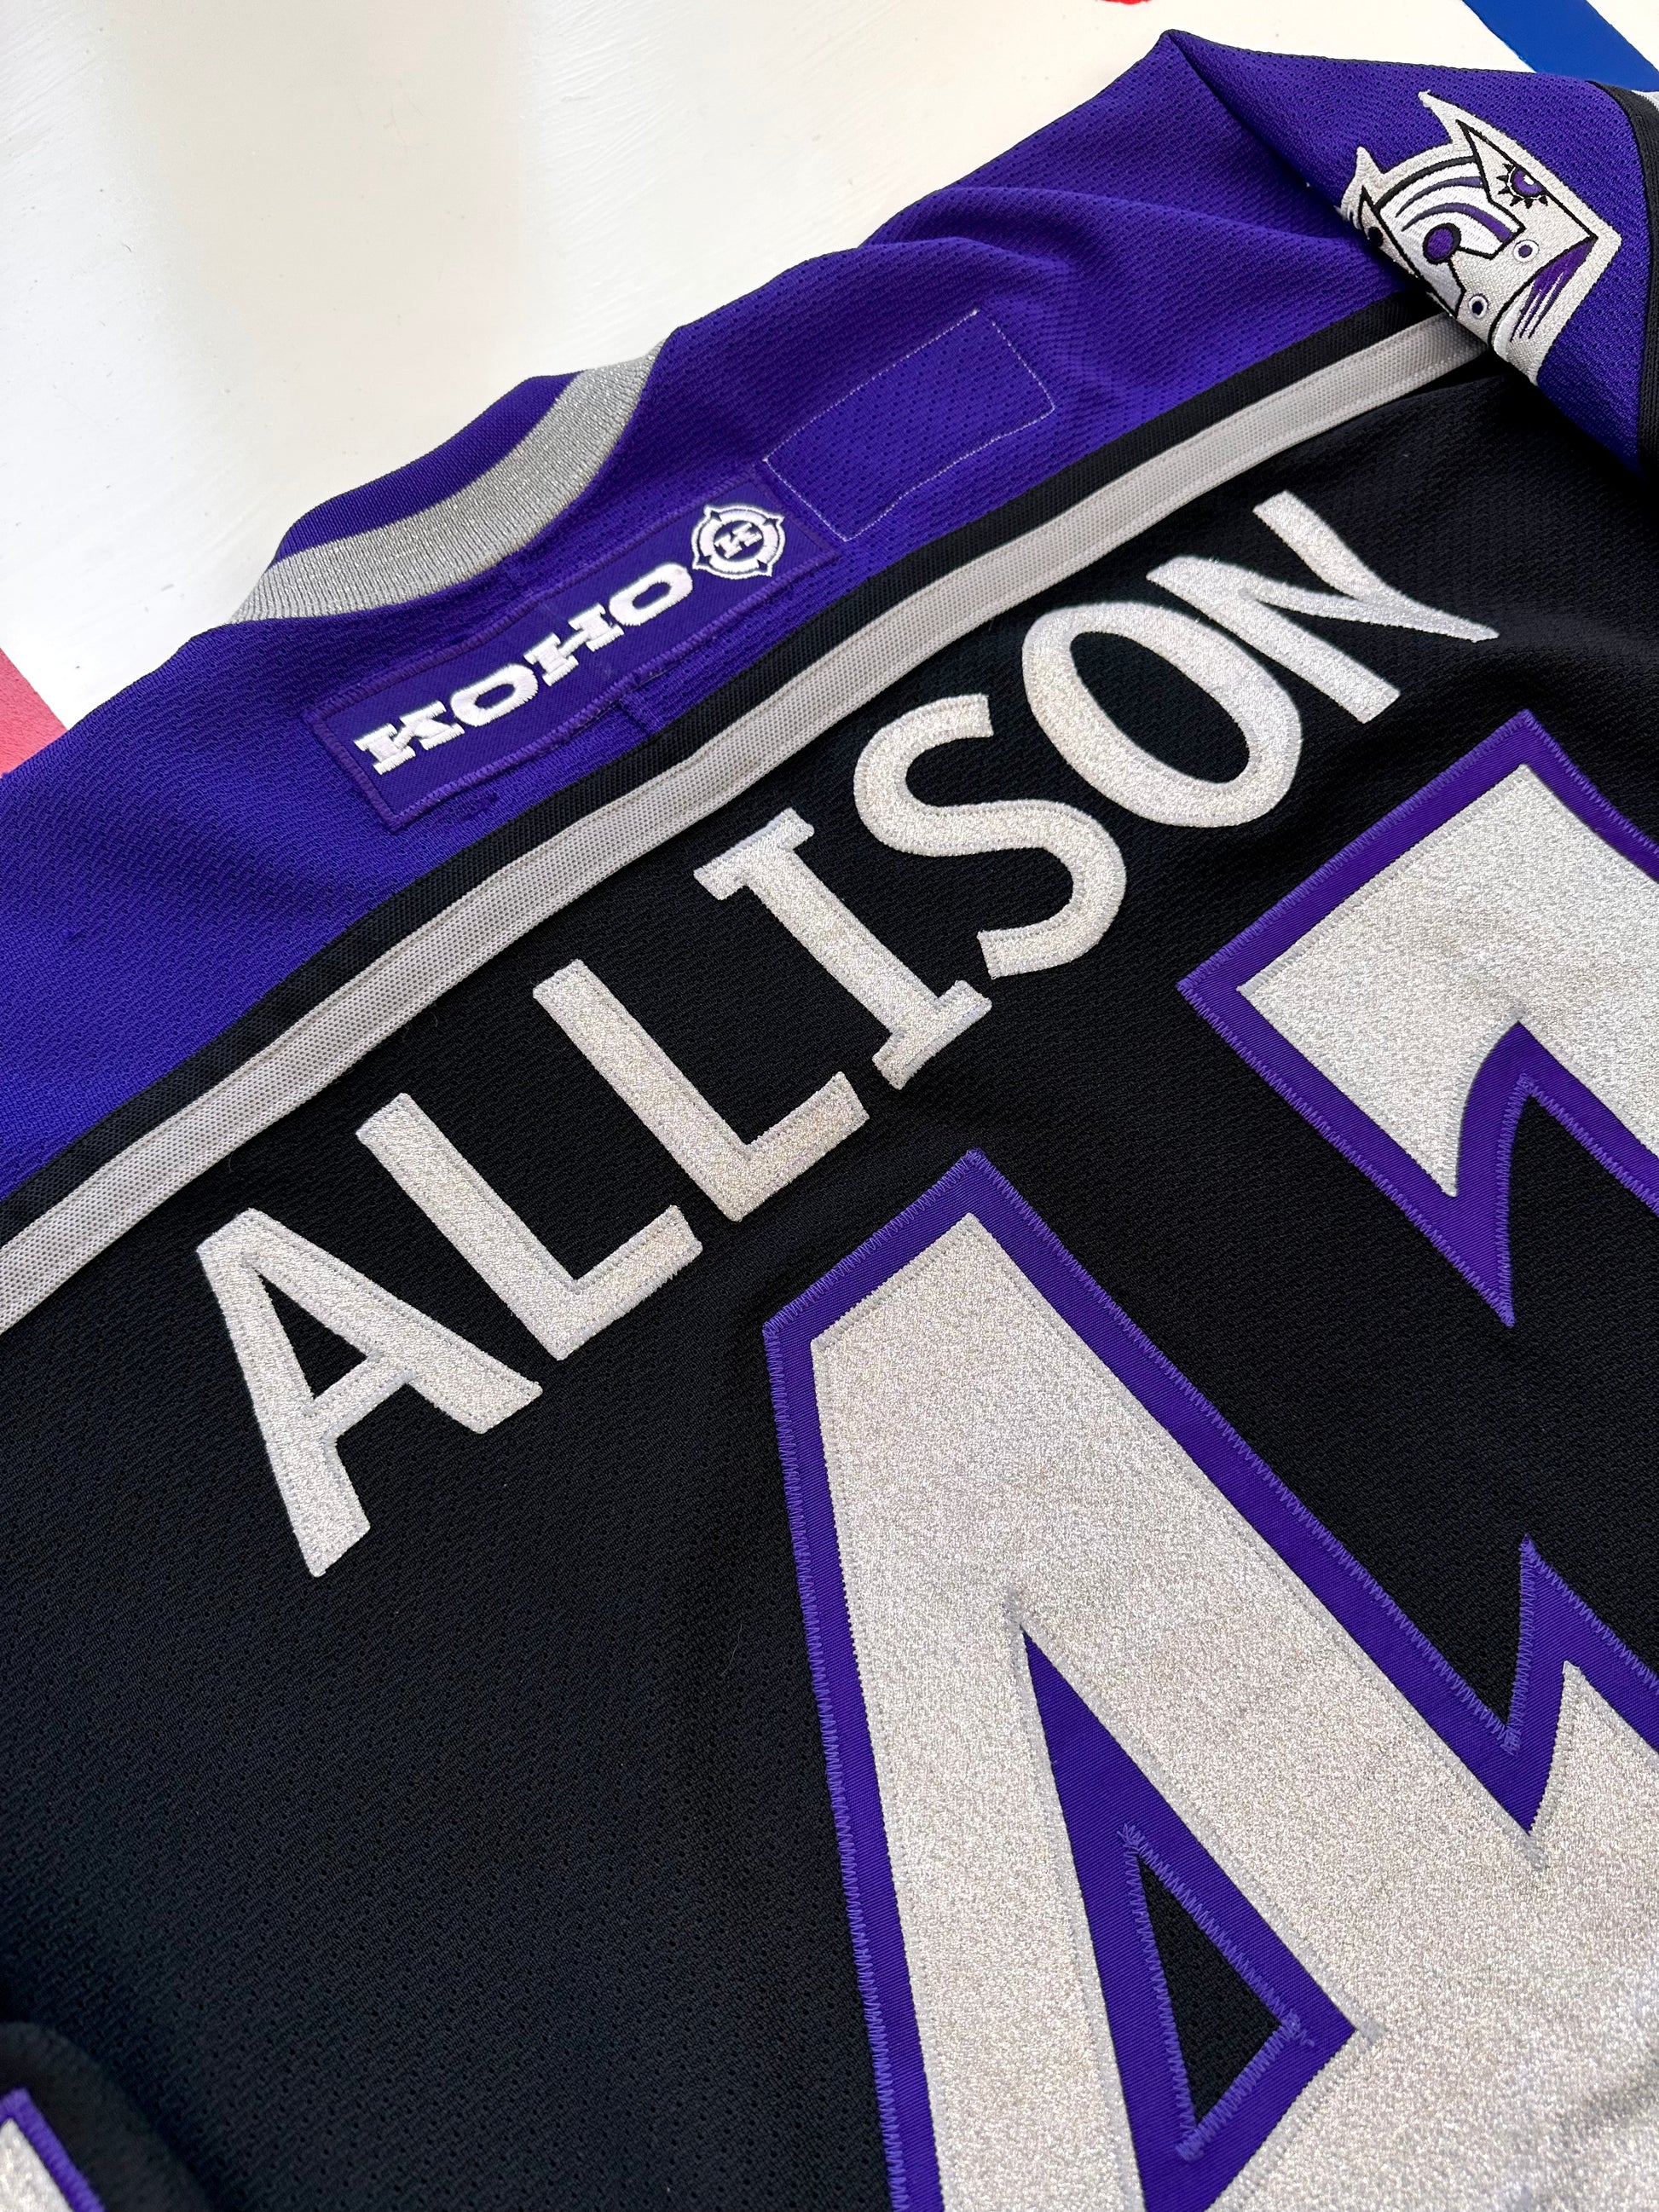 Los Angeles Kings 2001-2002 Jason Allison NHL Hockey Jersey (60